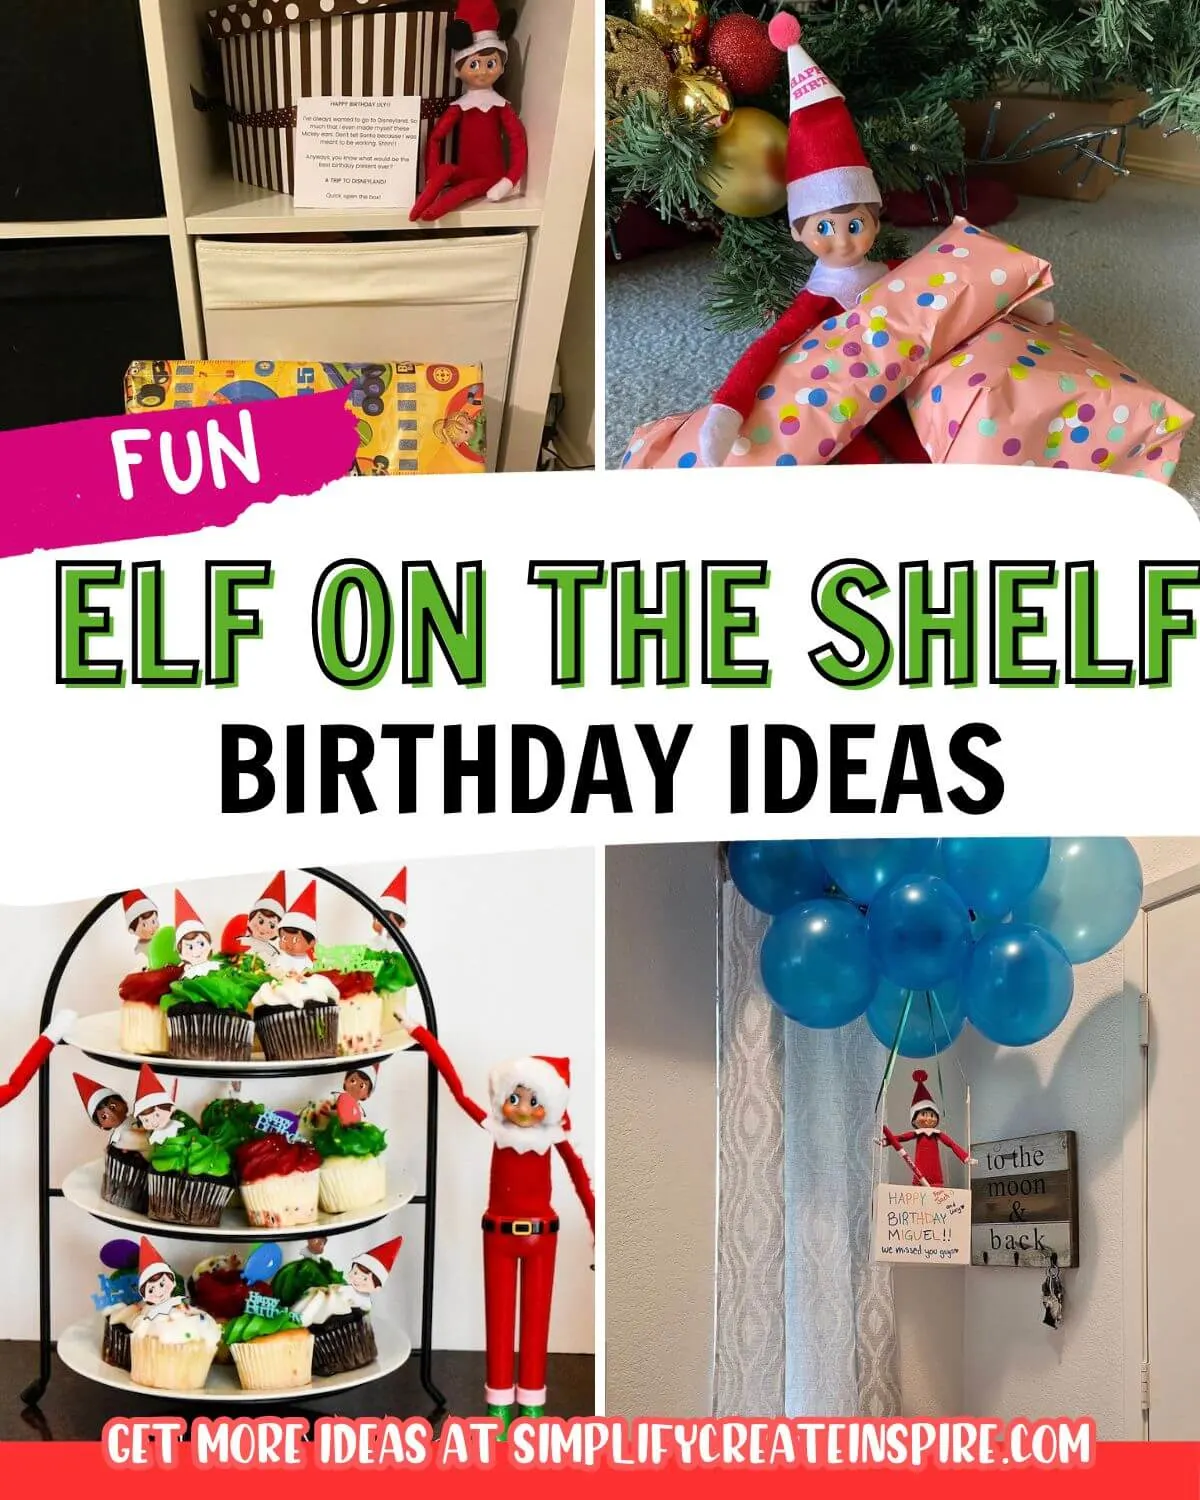 Elf on the shelf birthday ideas.